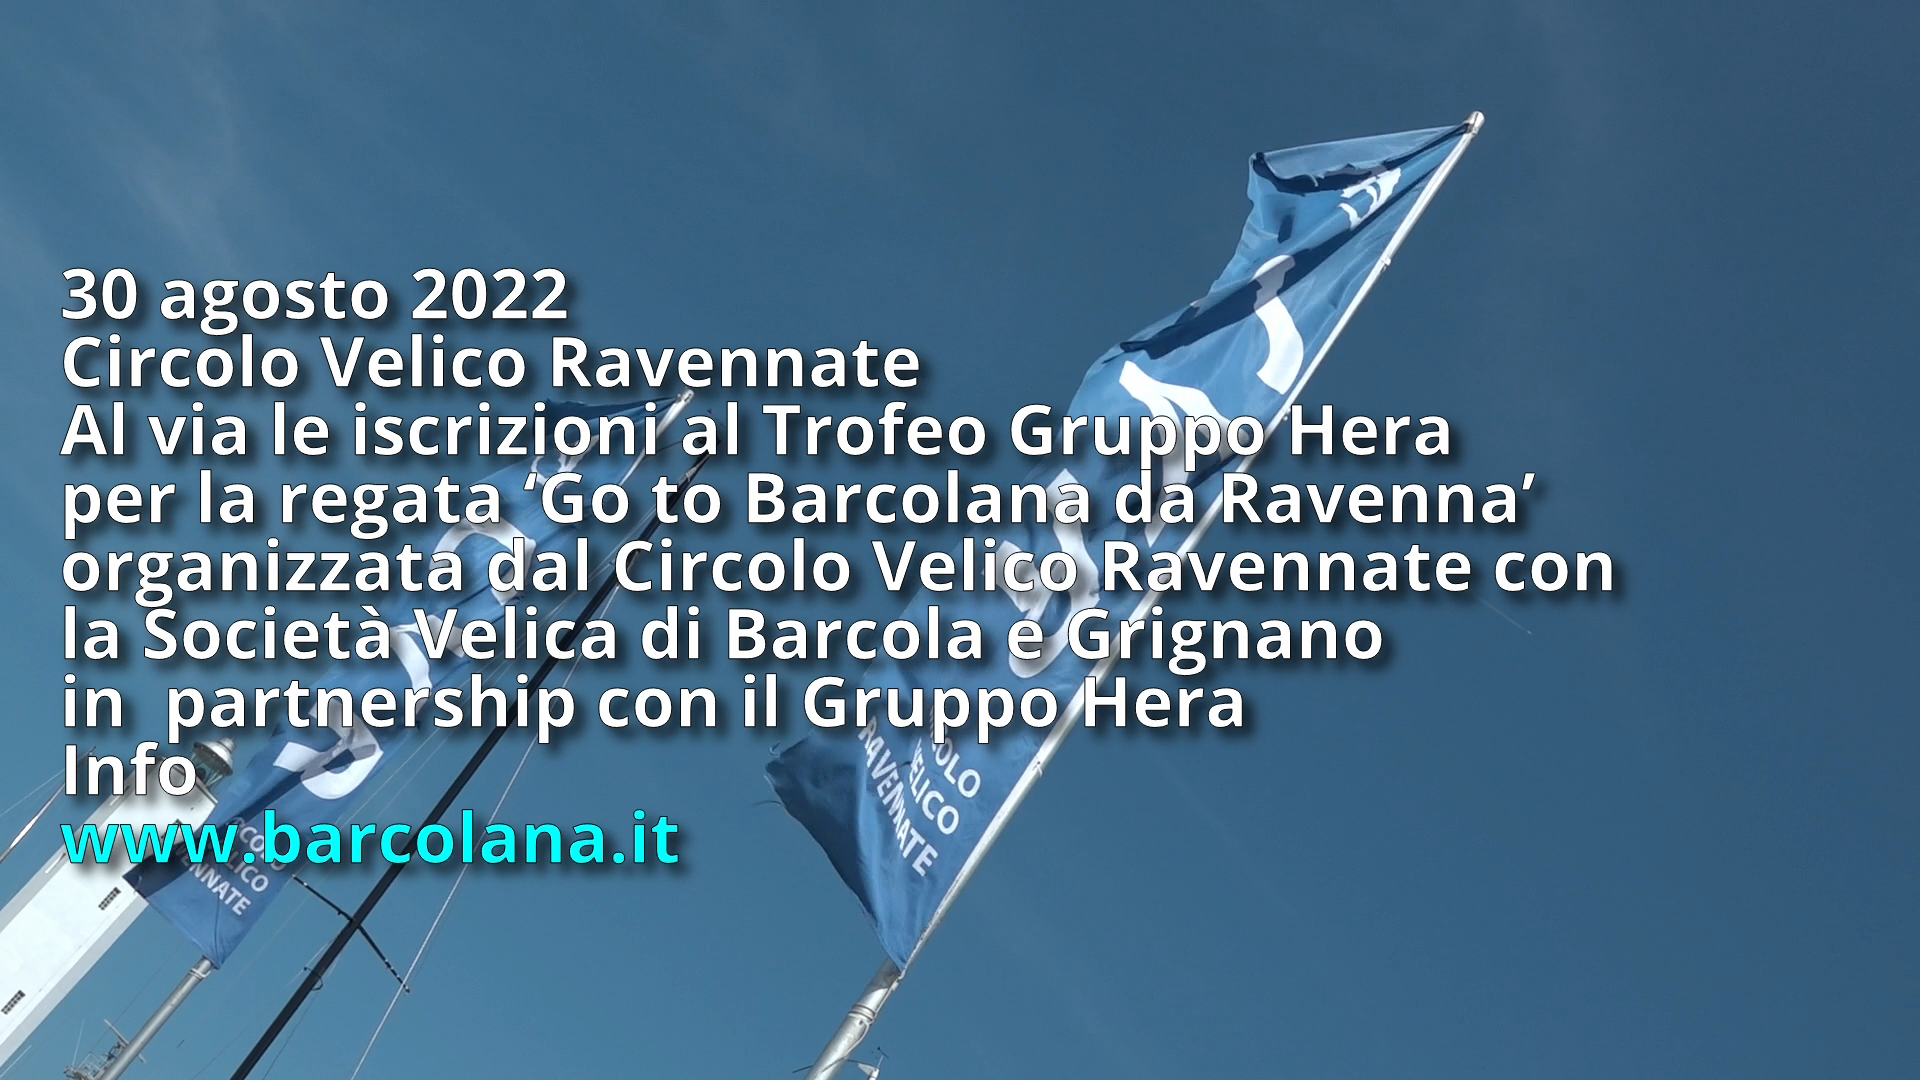 Trofeo Gruppo Hera: “Go To Barcolana da Ravenna”